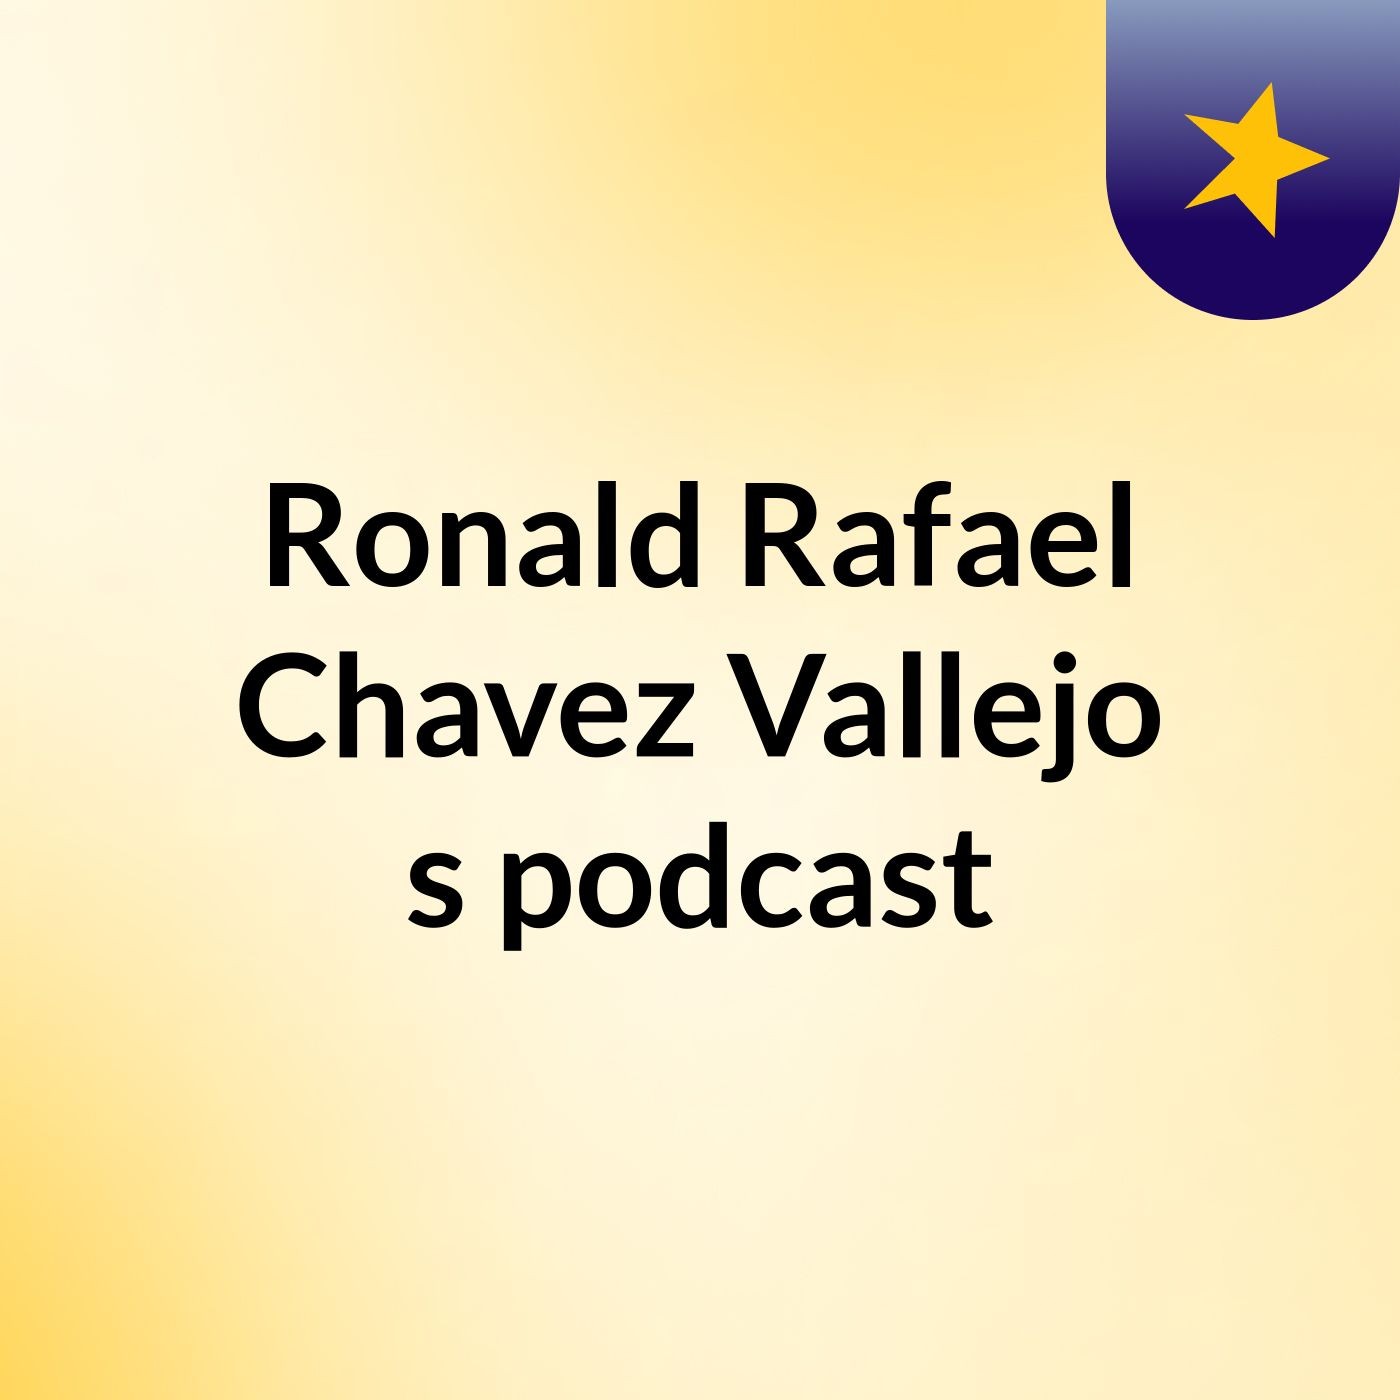 Ronald Rafael Chavez Vallejo's podcast